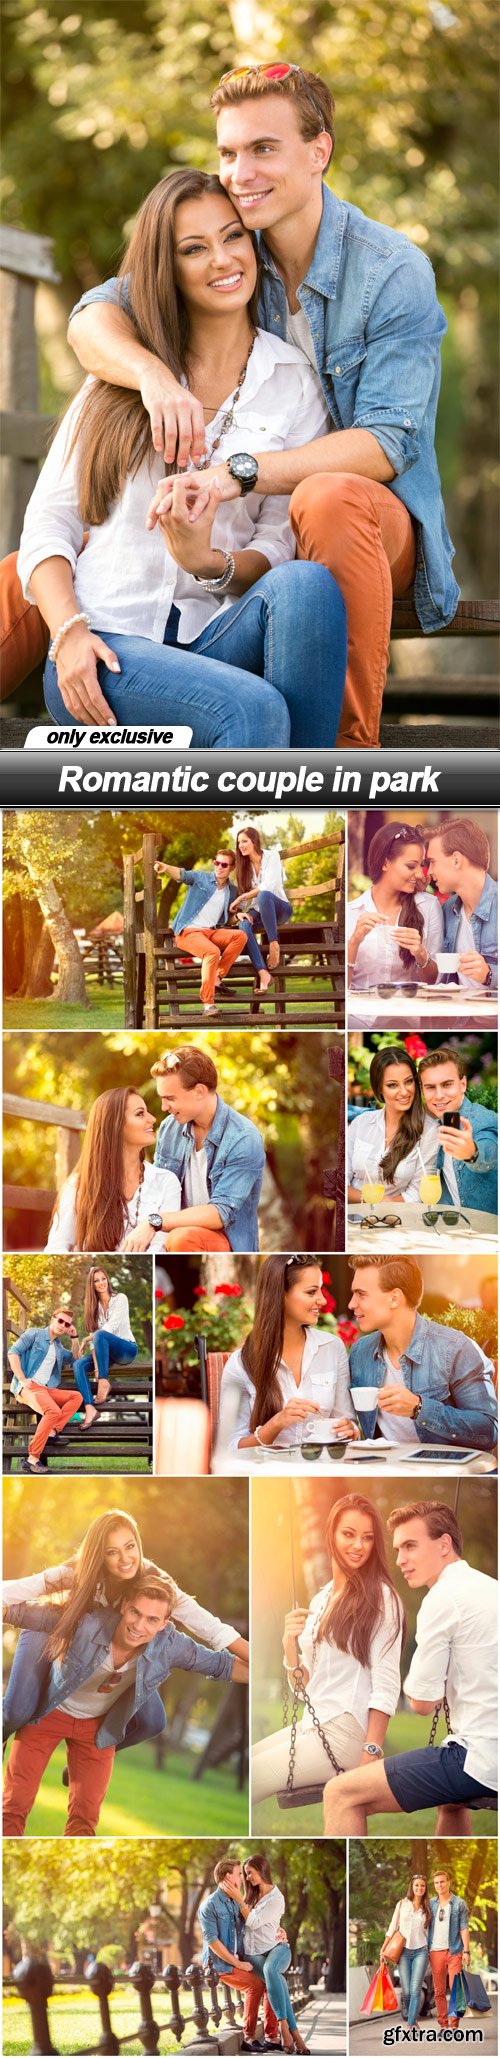 Romantic couple in park - 11 UHQ JPEG